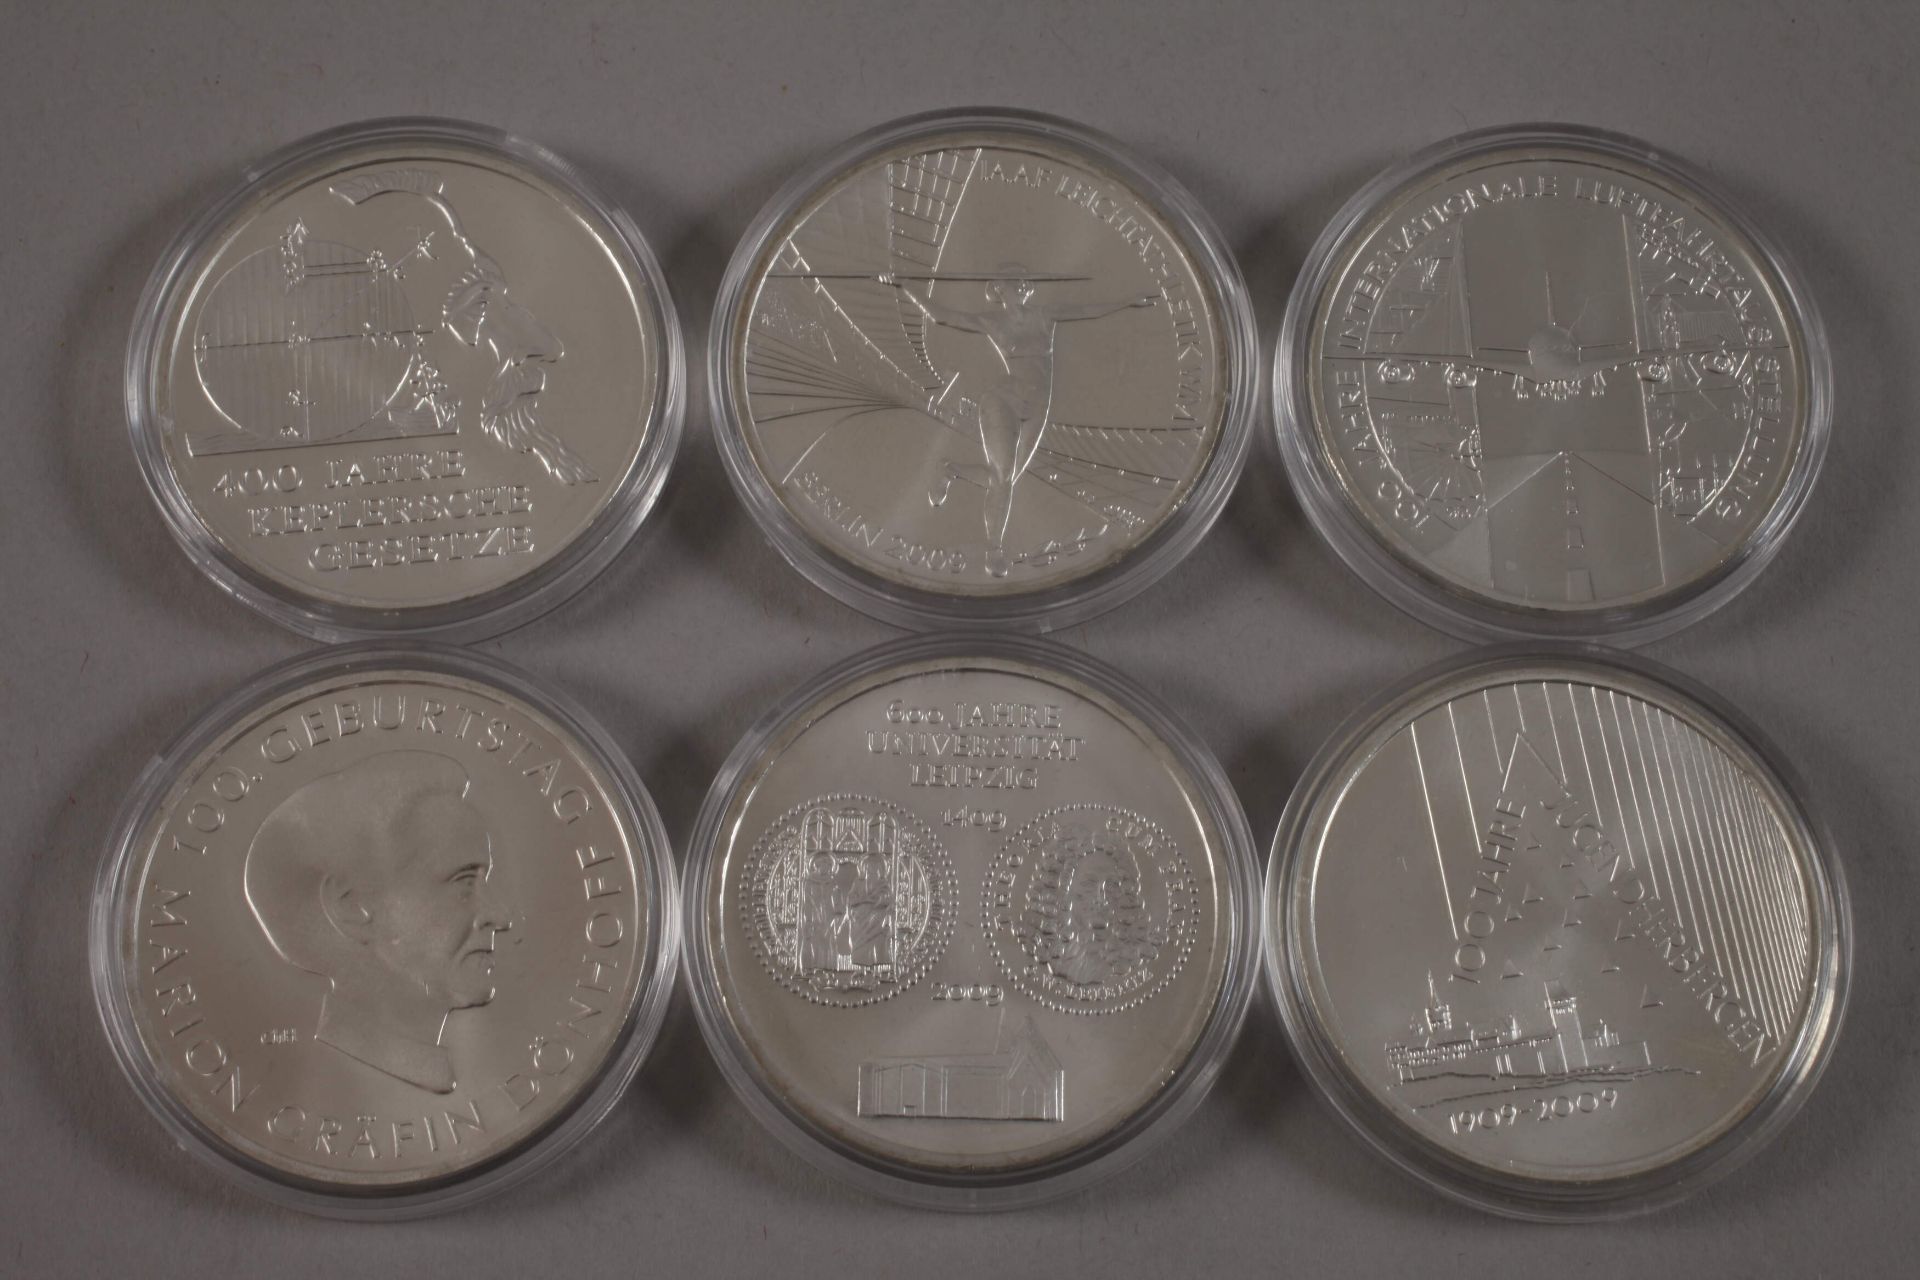 Convolute BRD commemorative coins - Image 2 of 3